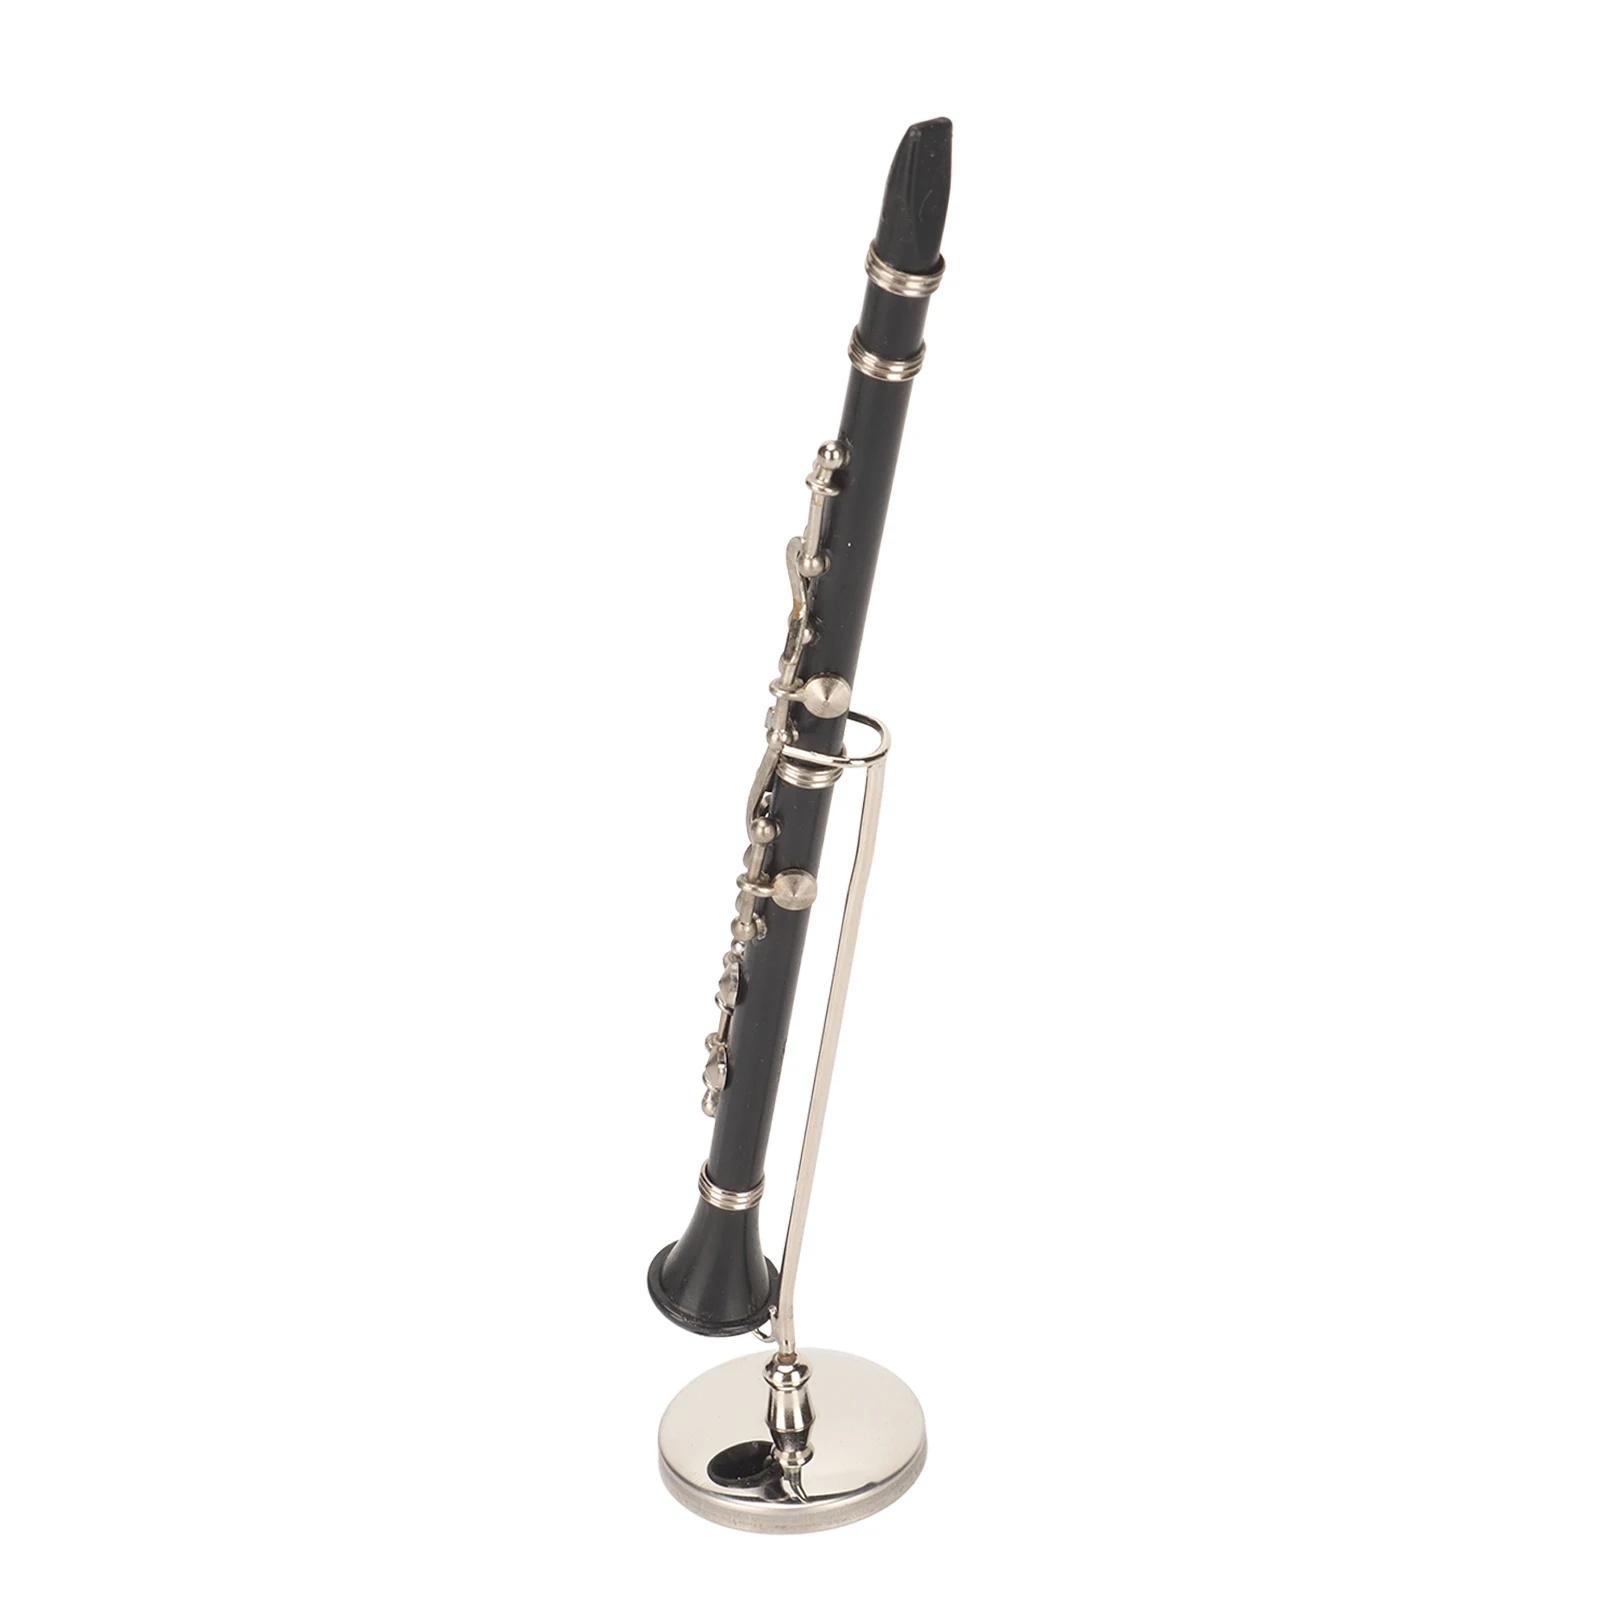 Миниатюрно копие на кларинет с поставка и футляром, Мини музикален инструмент, модел куклена къща, украшение 6,3 инча Изображение 0